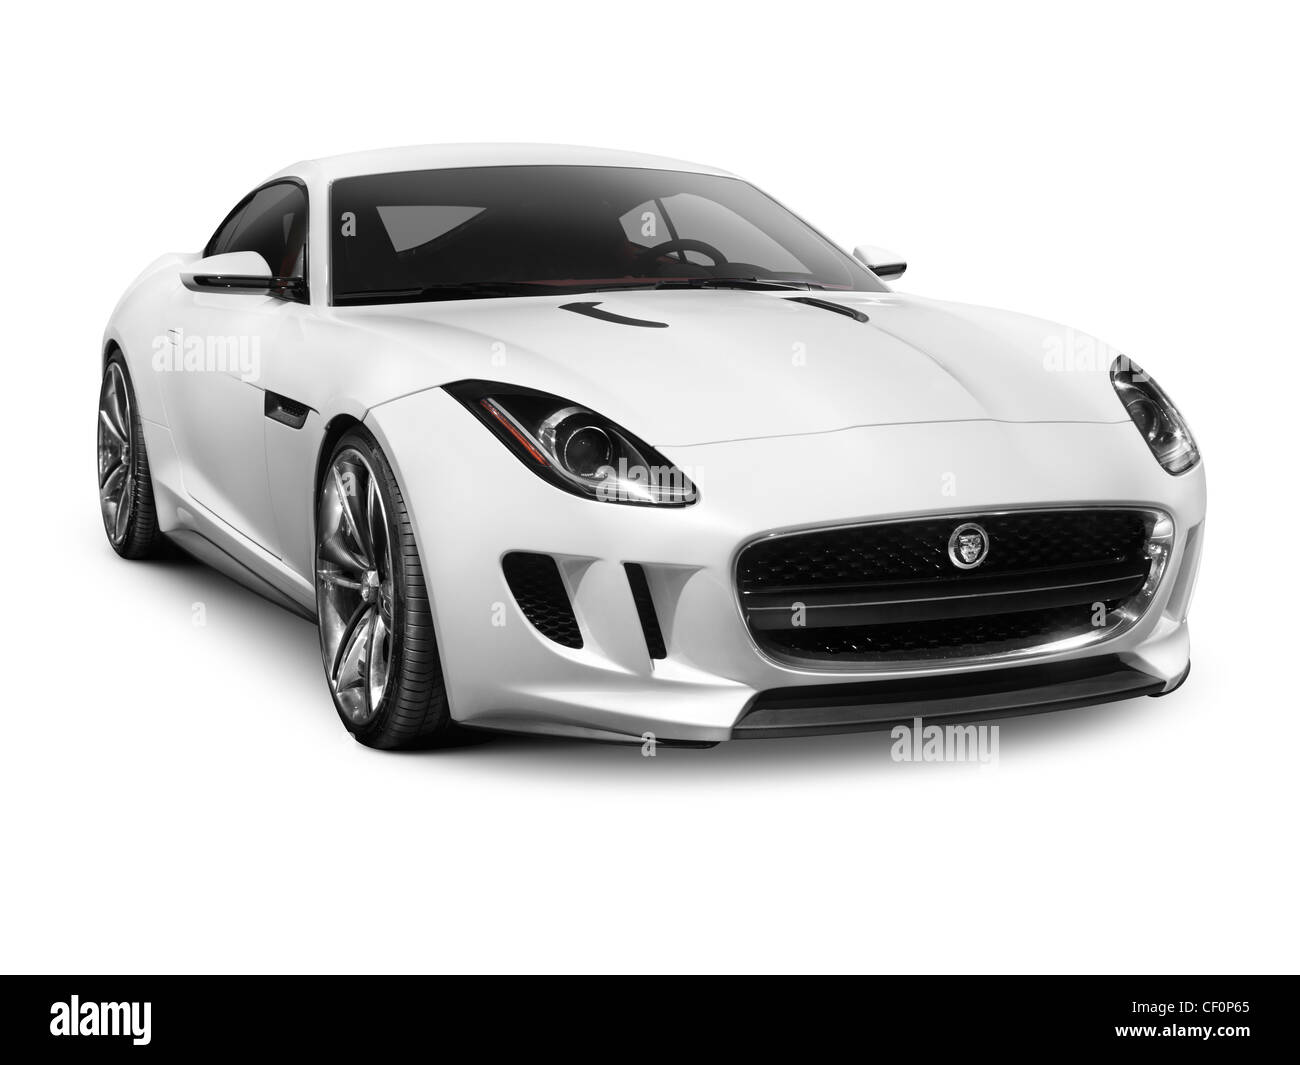 License and prints at MaximImages.com - Jaguar luxury sports car, automotive stock photo. Stock Photo